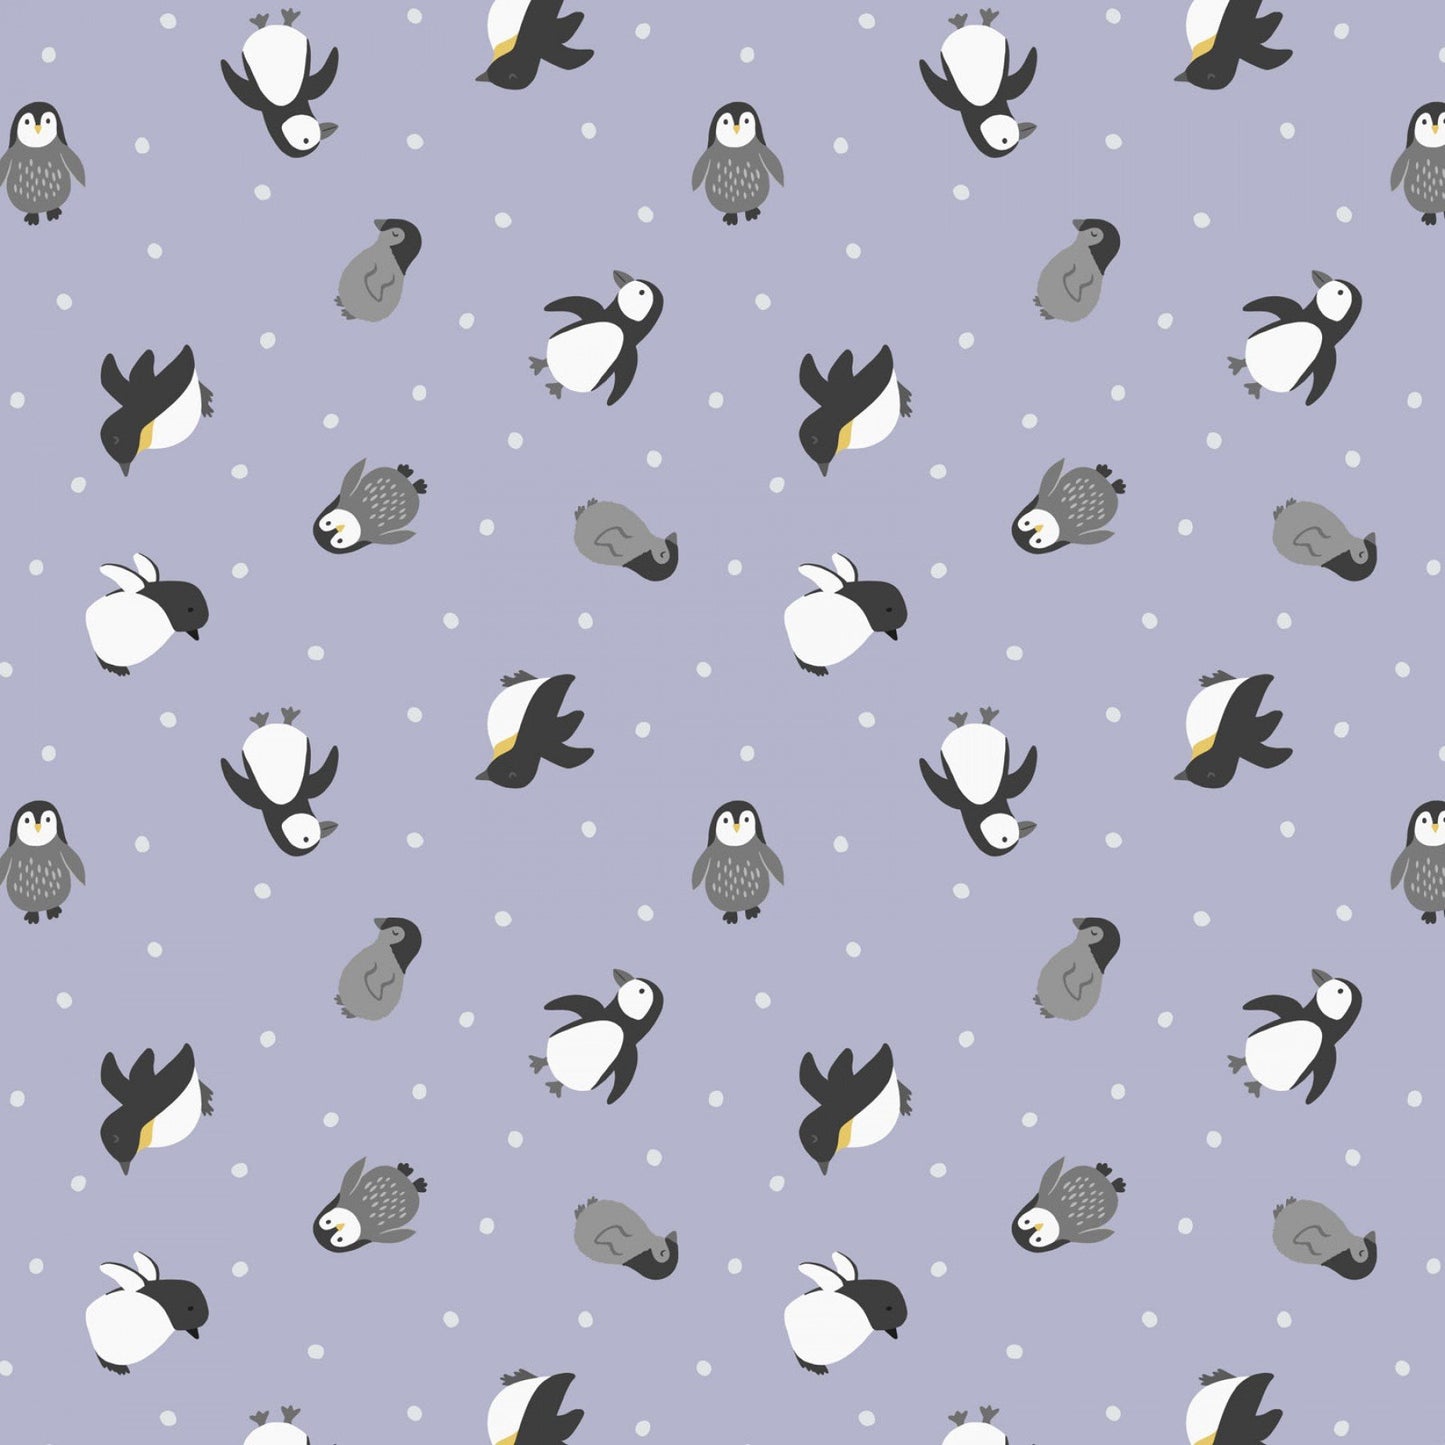 Small Things... Polar Animals - Penguins